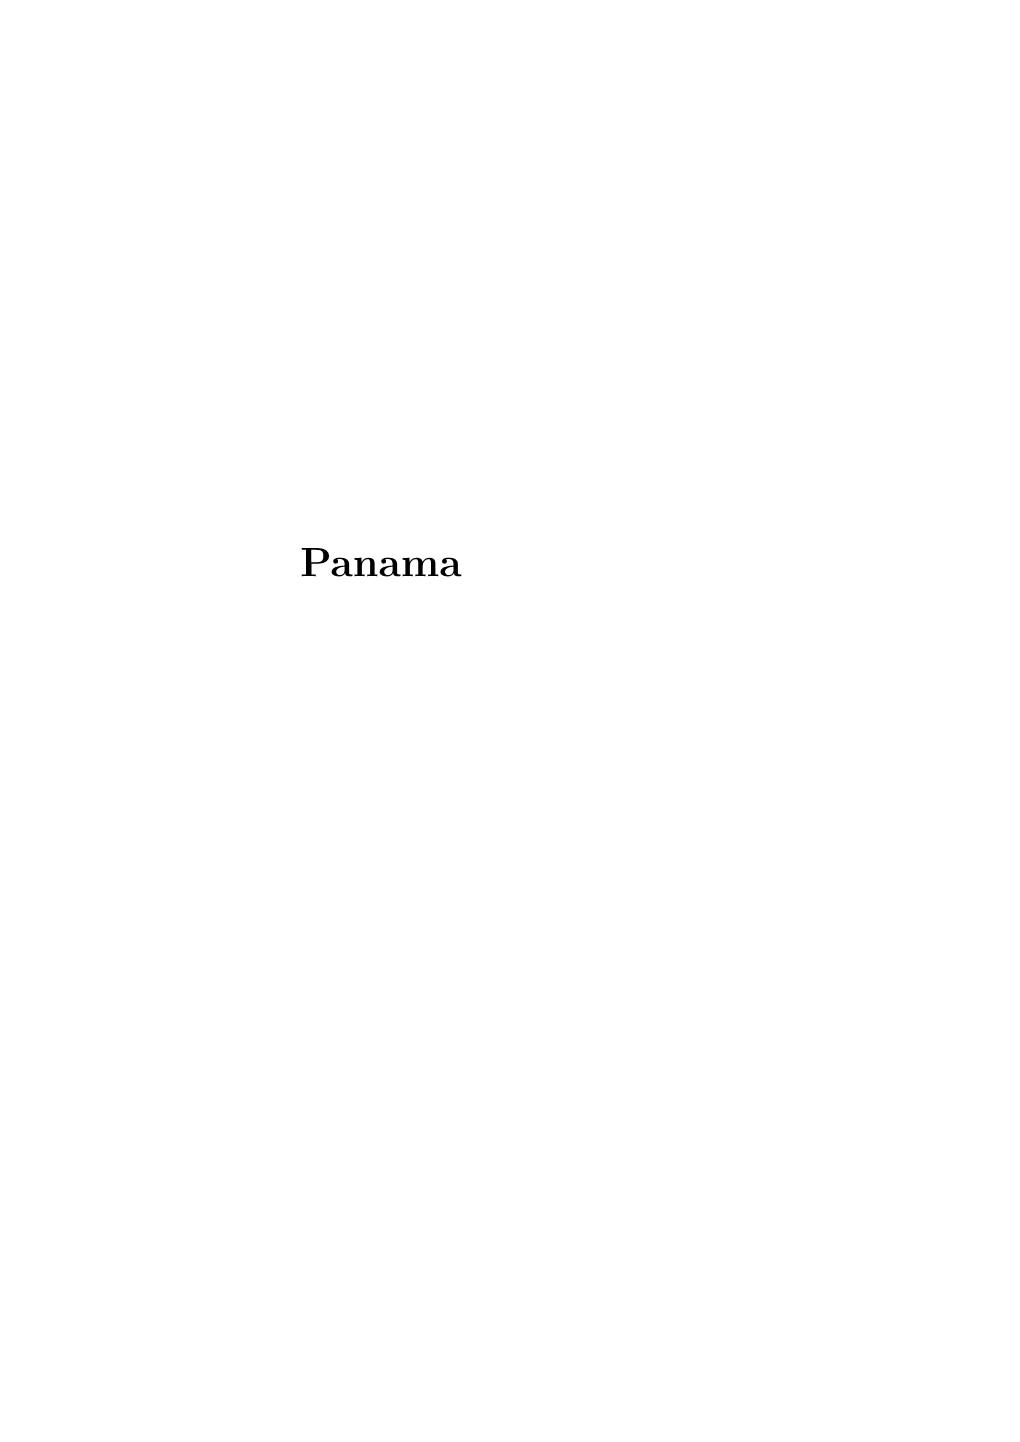 Political Status of Ethnic Groups in Panama